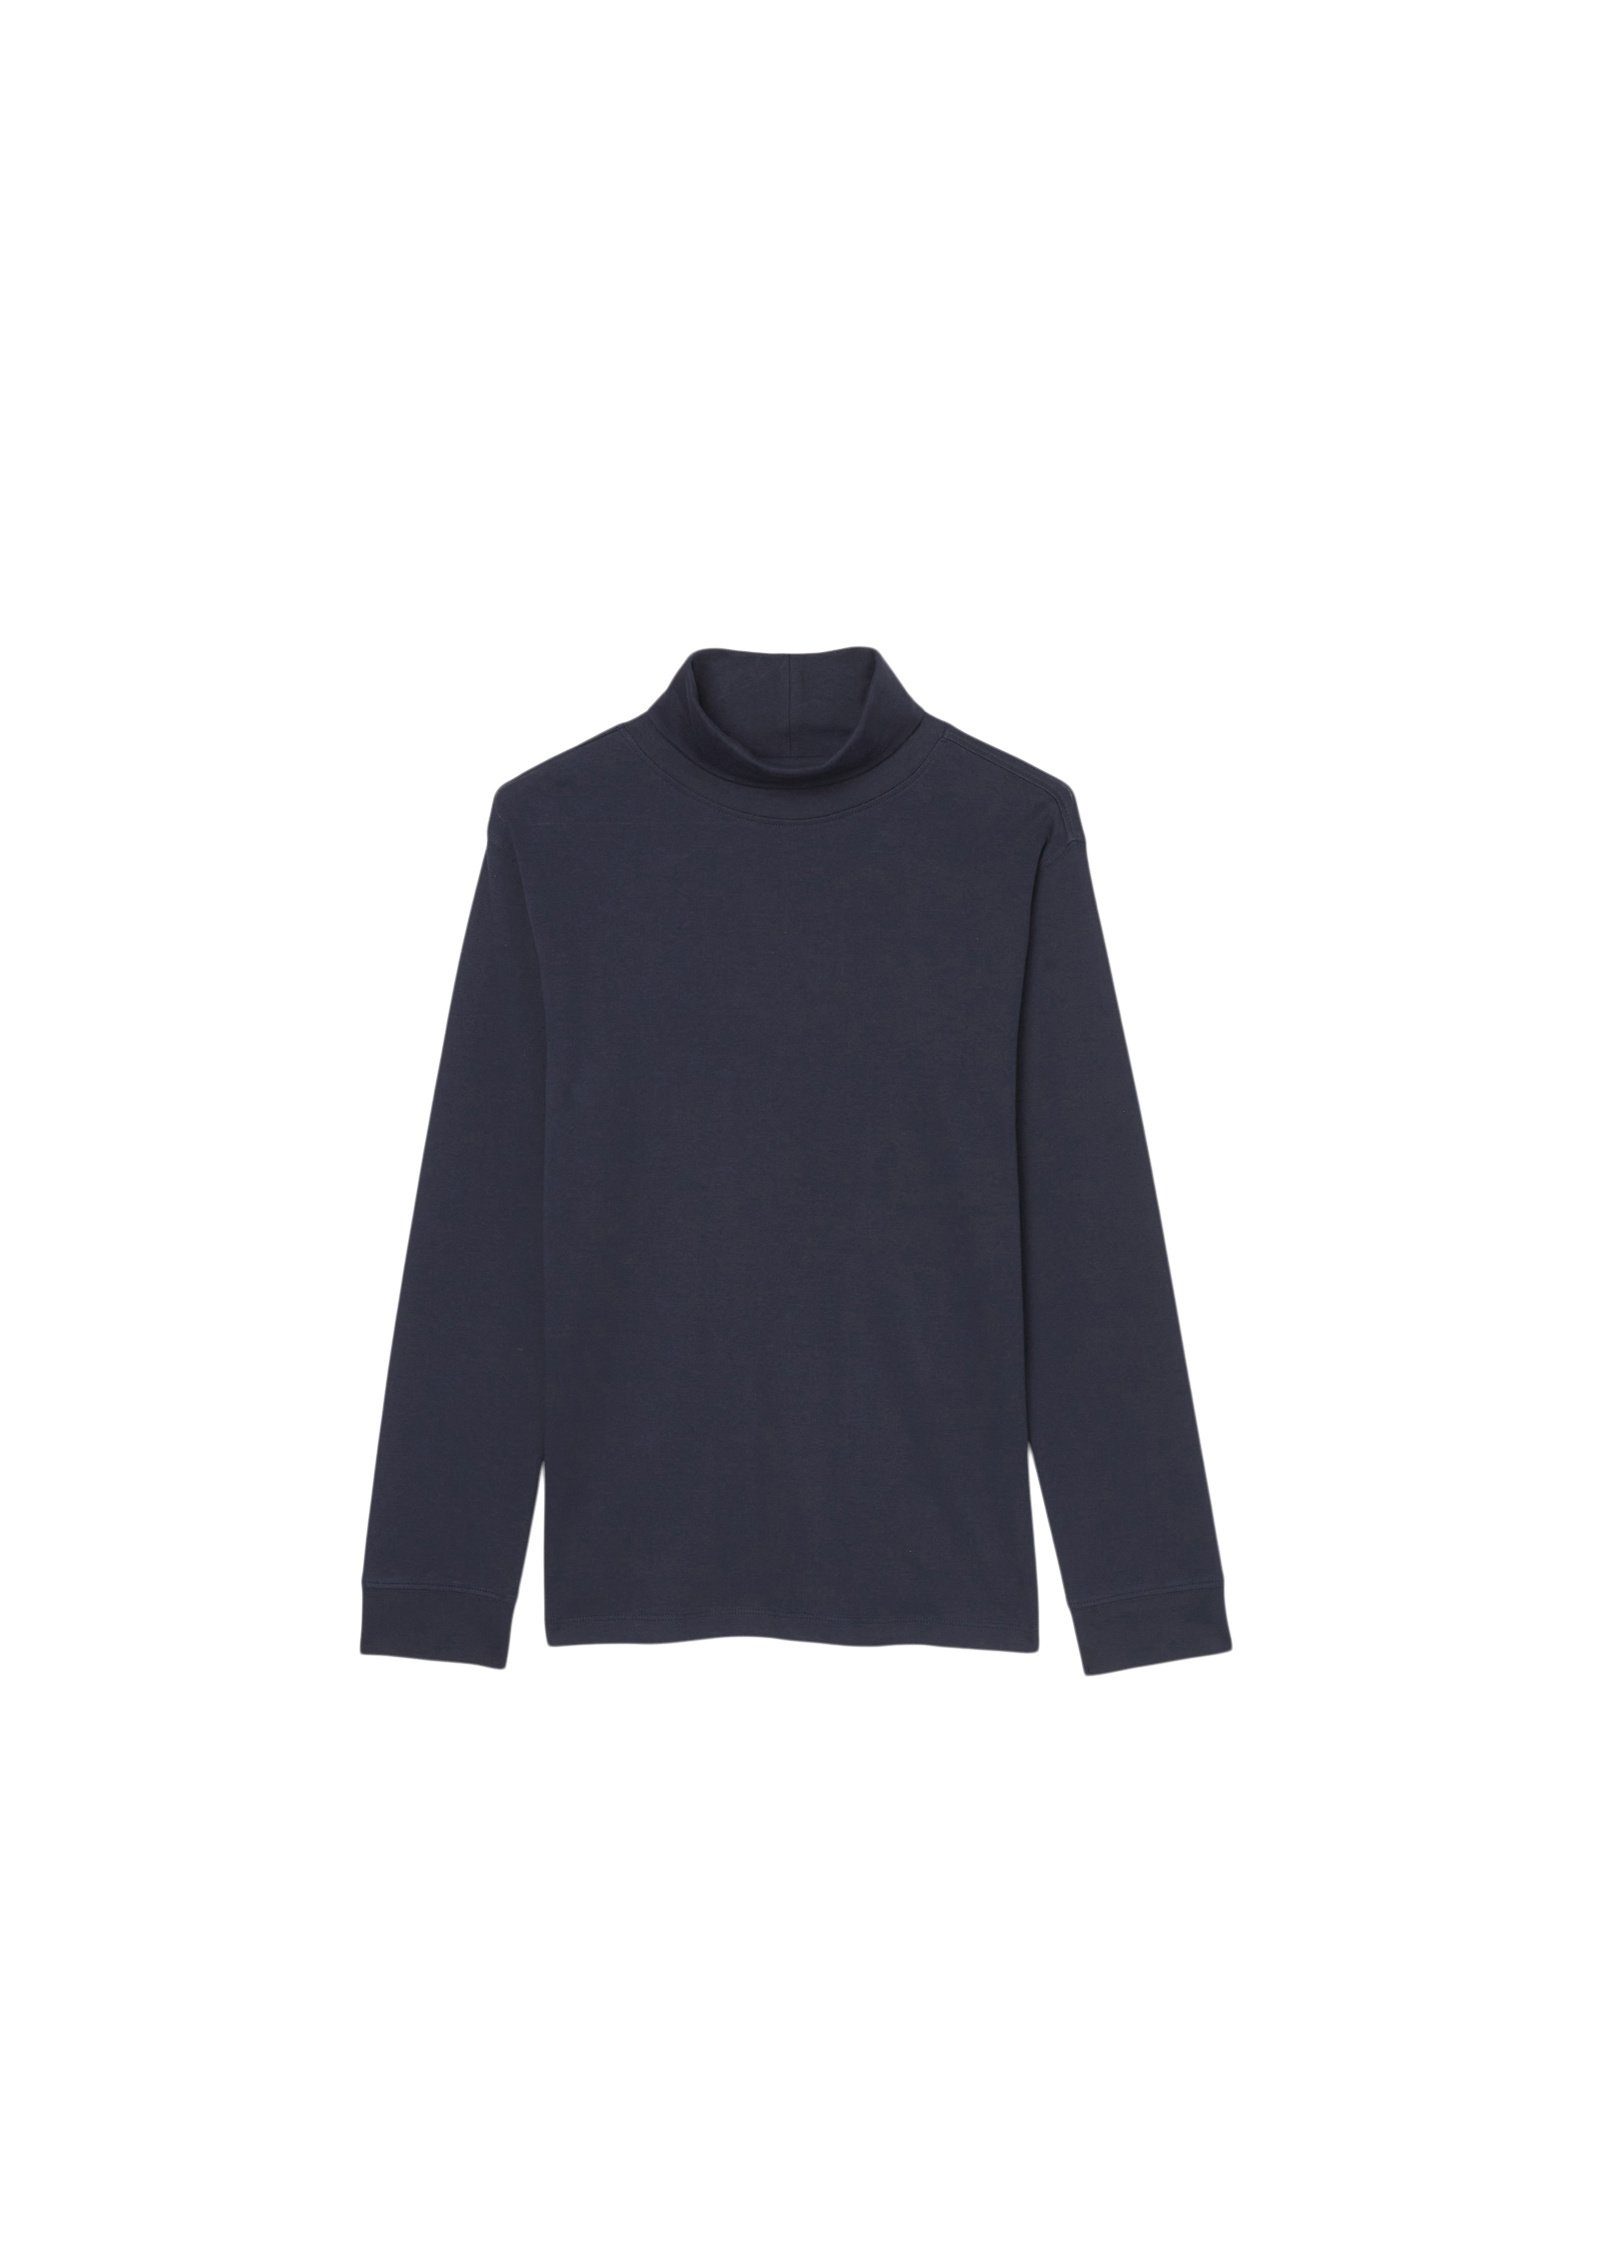 Beliebte Designs Marc O'Polo Strickpullover in softer Jersey-Qualität blau